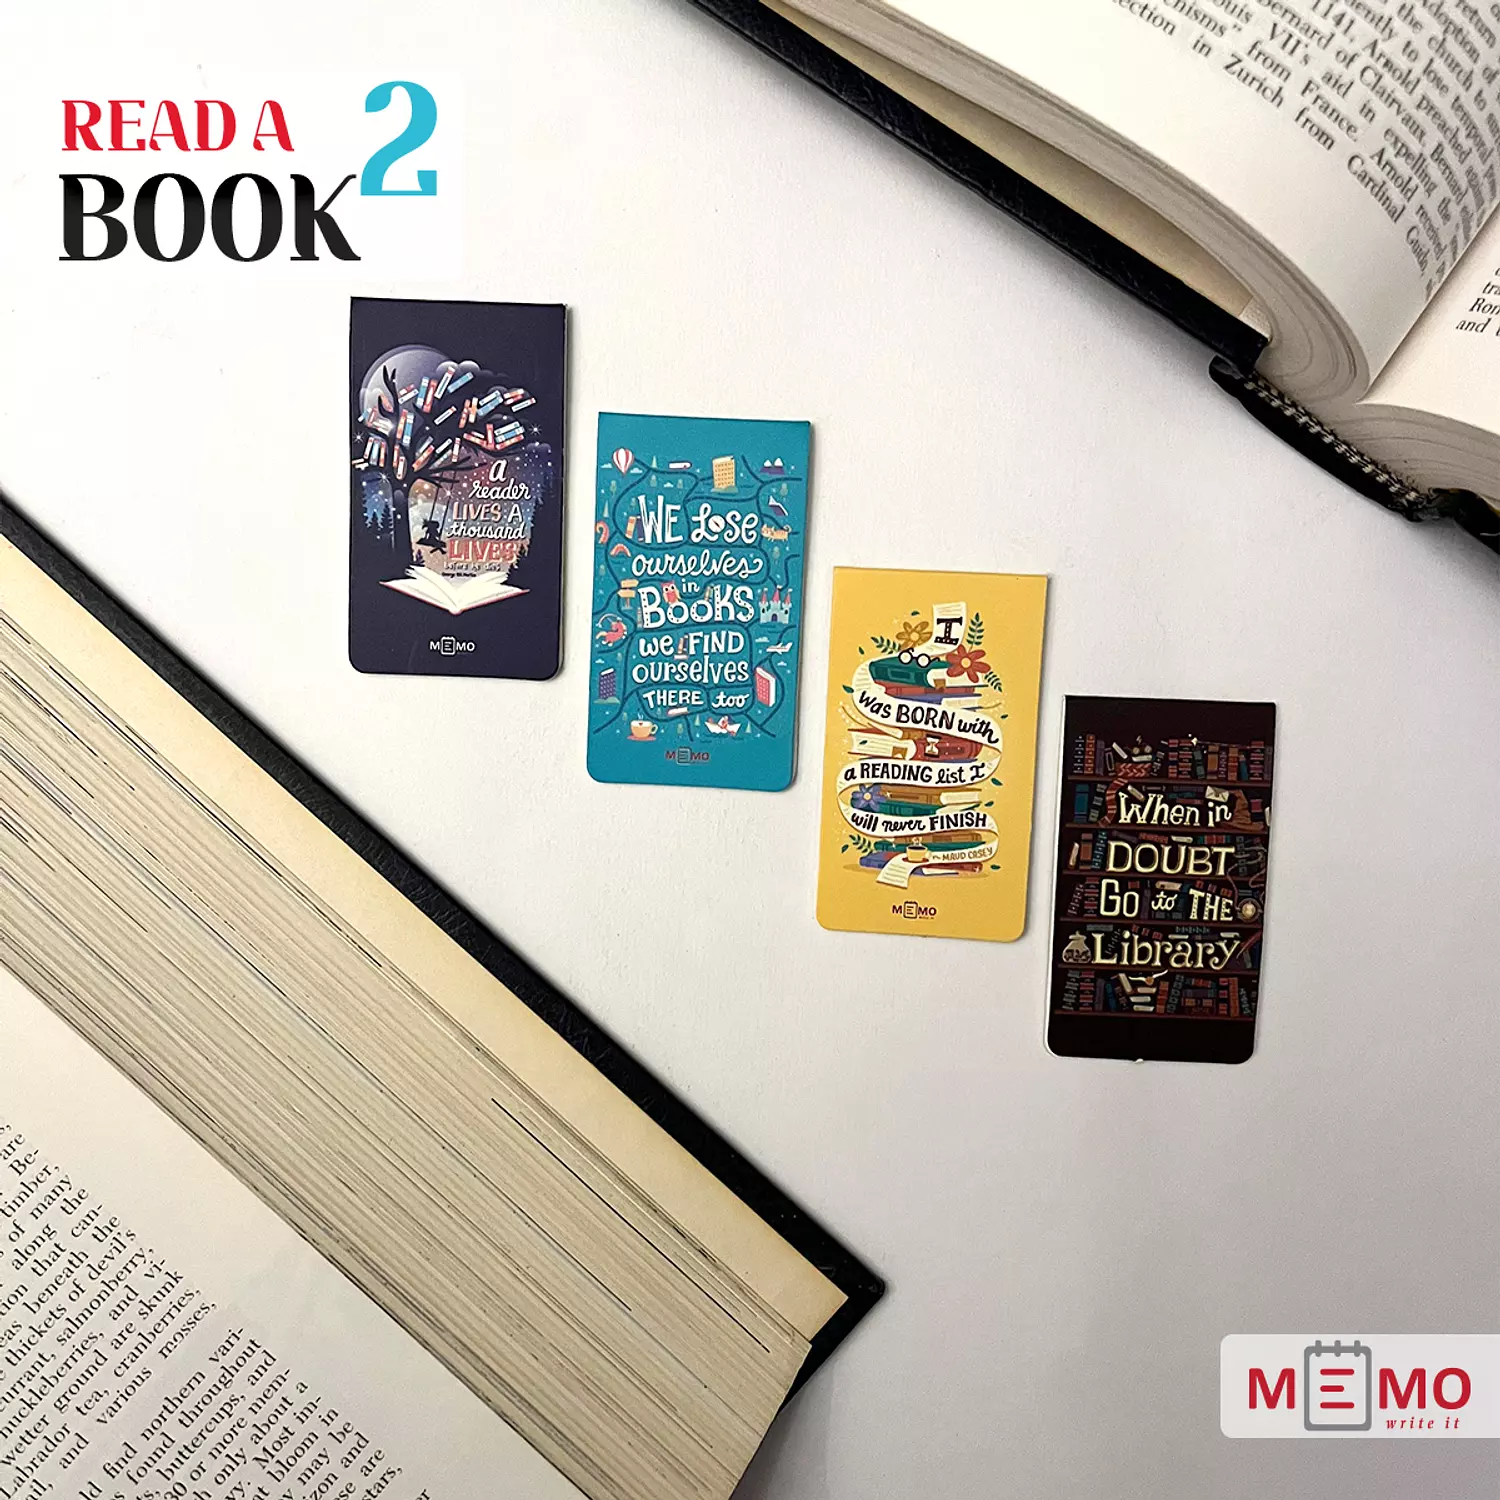 Memo Read a book 2 Magnetic Bookmarks (4 pcs) 2